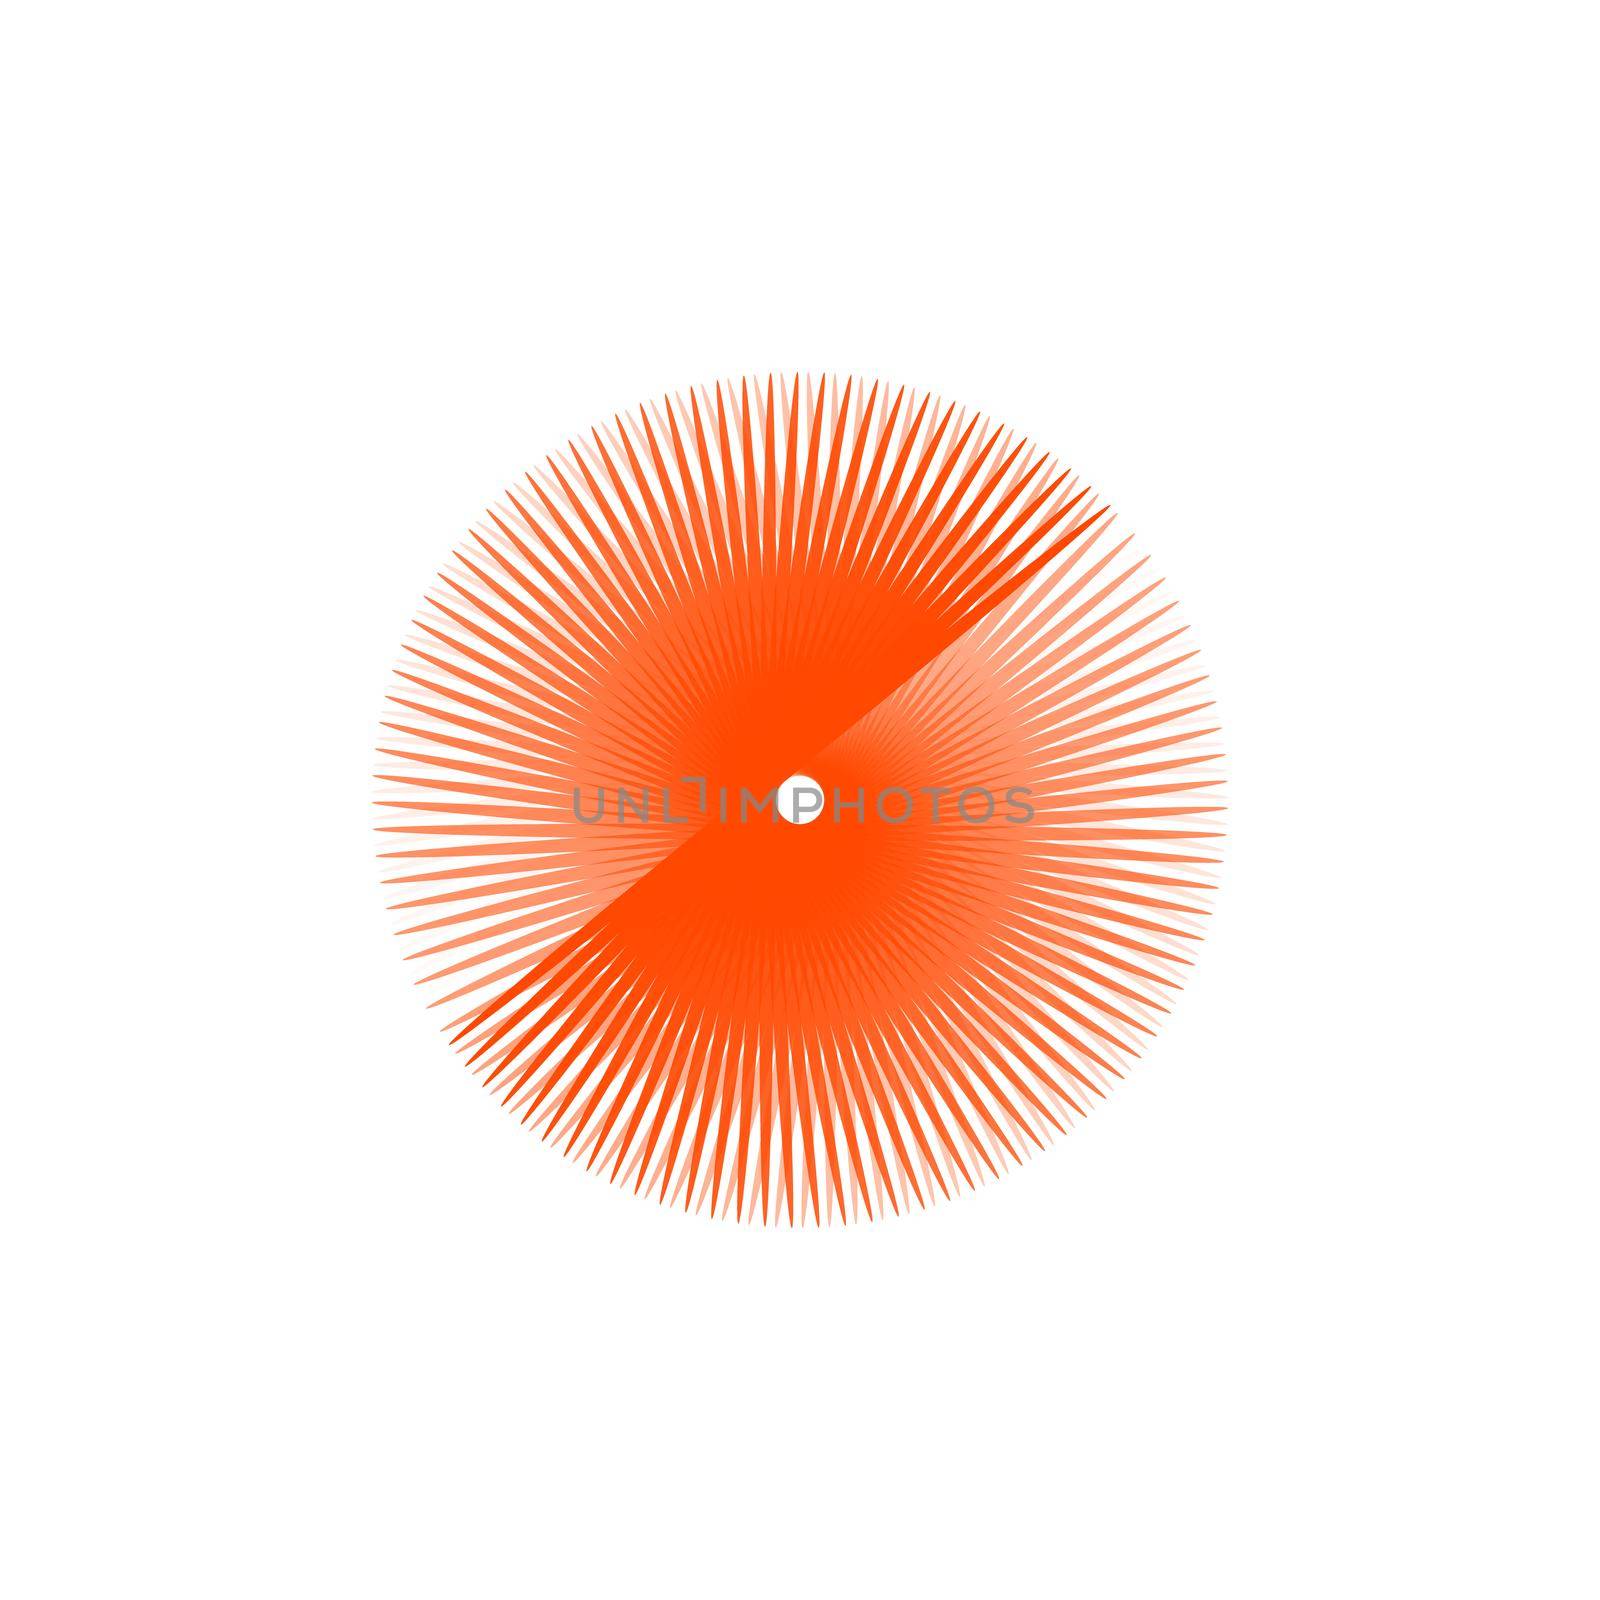 Creative vector illustration of geometric sun beams. Stock Vector illustration isolated